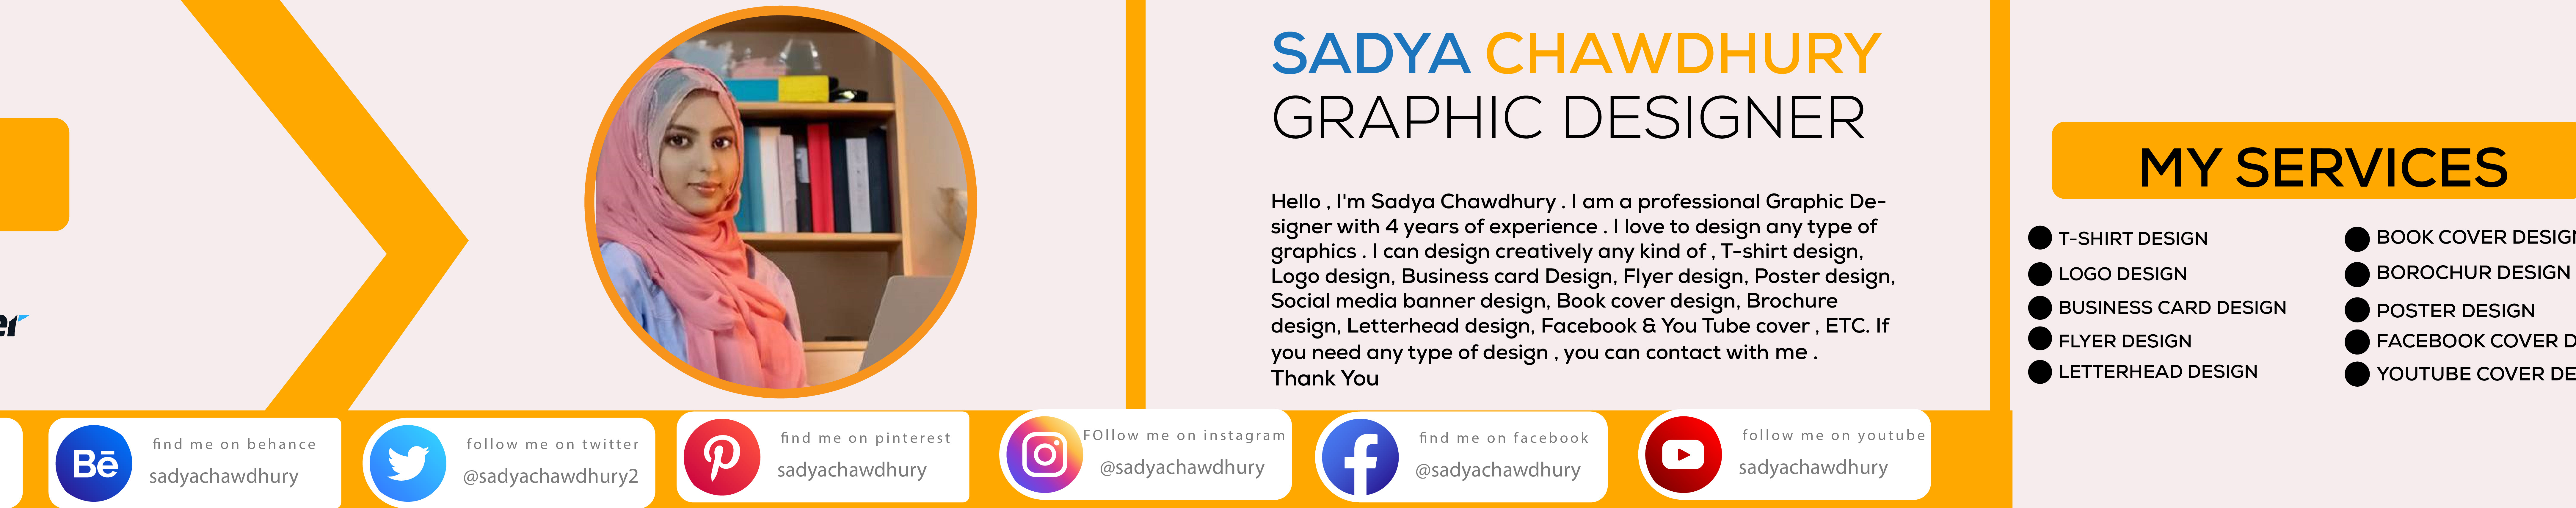 sadya chawdhury's profile banner